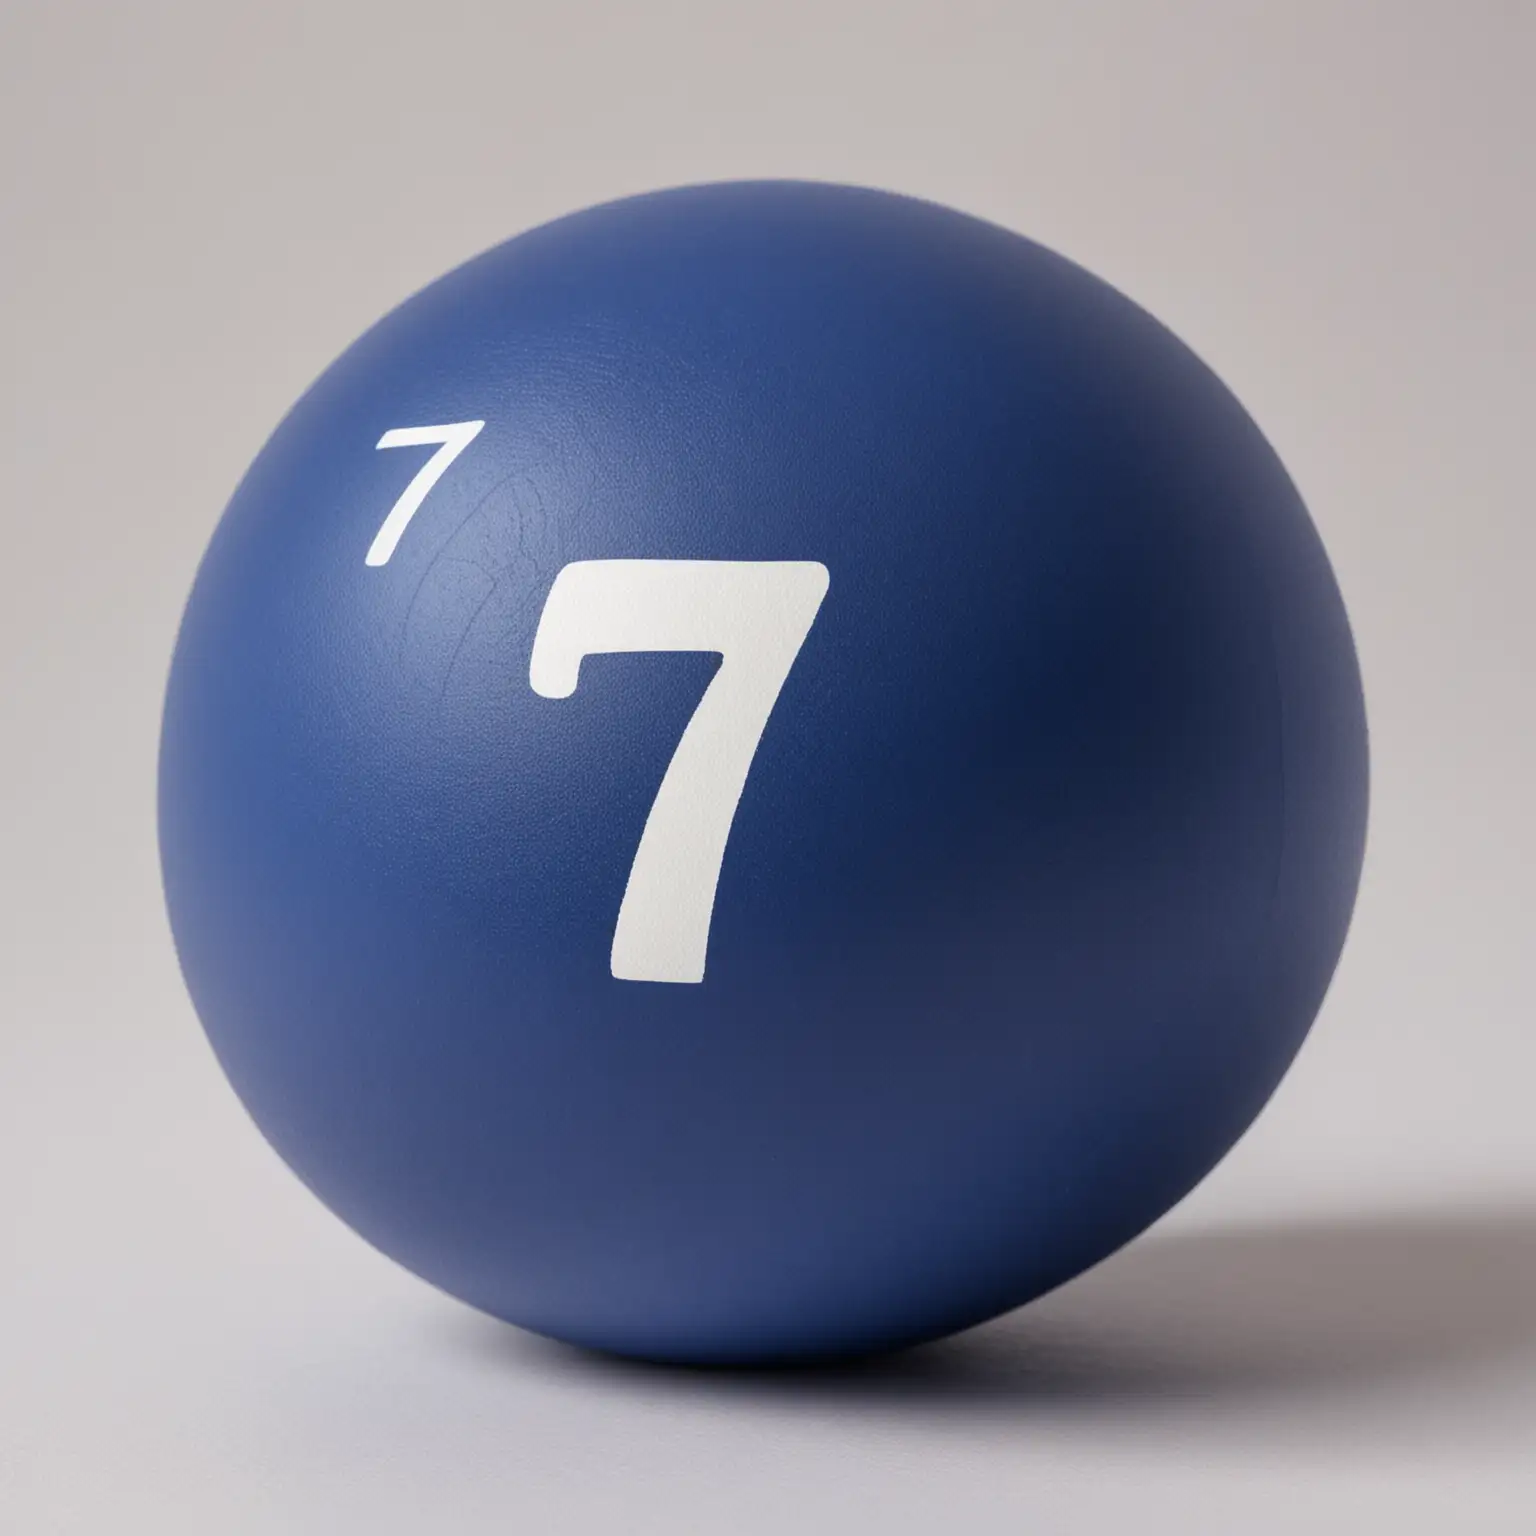 Dark Blue Matt Ball with Printed Number 7